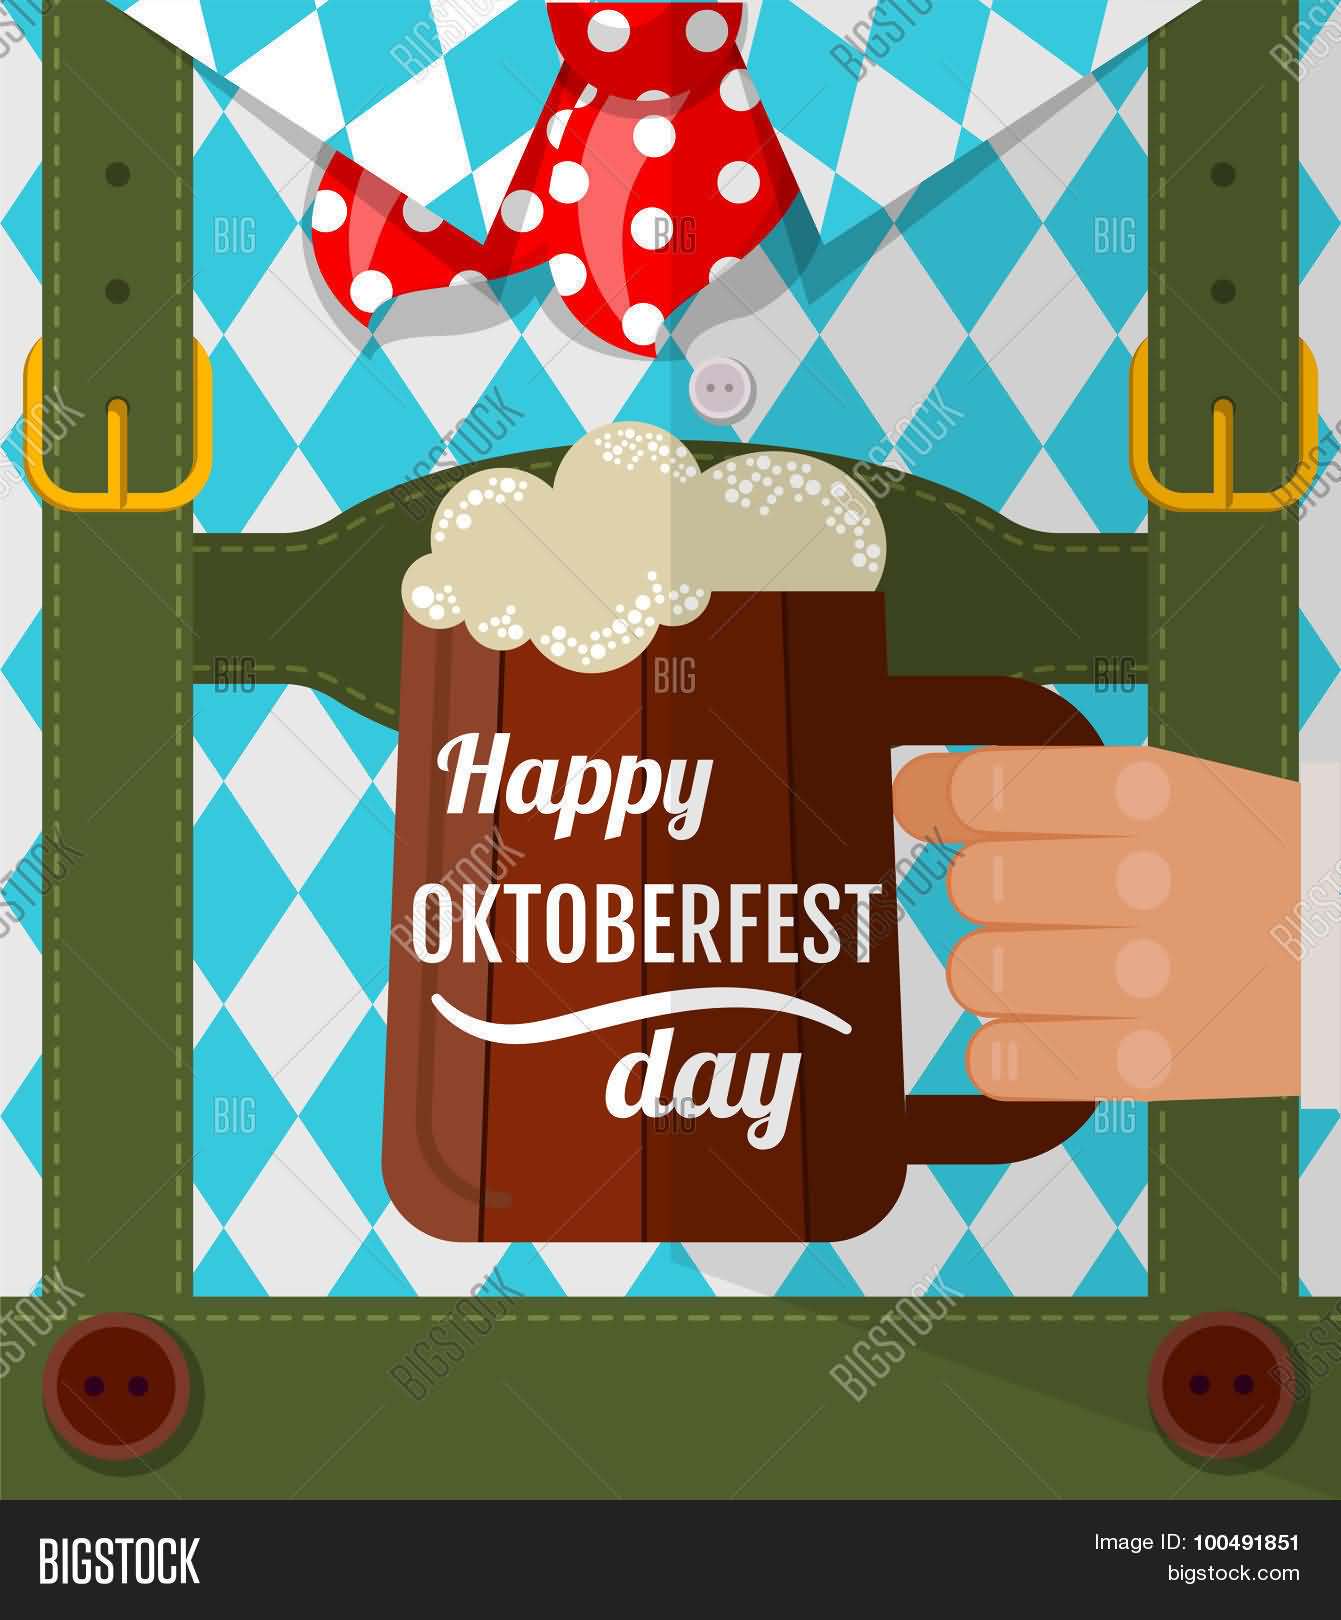 Happy Oktoberfest Day Beer Mug Illustration